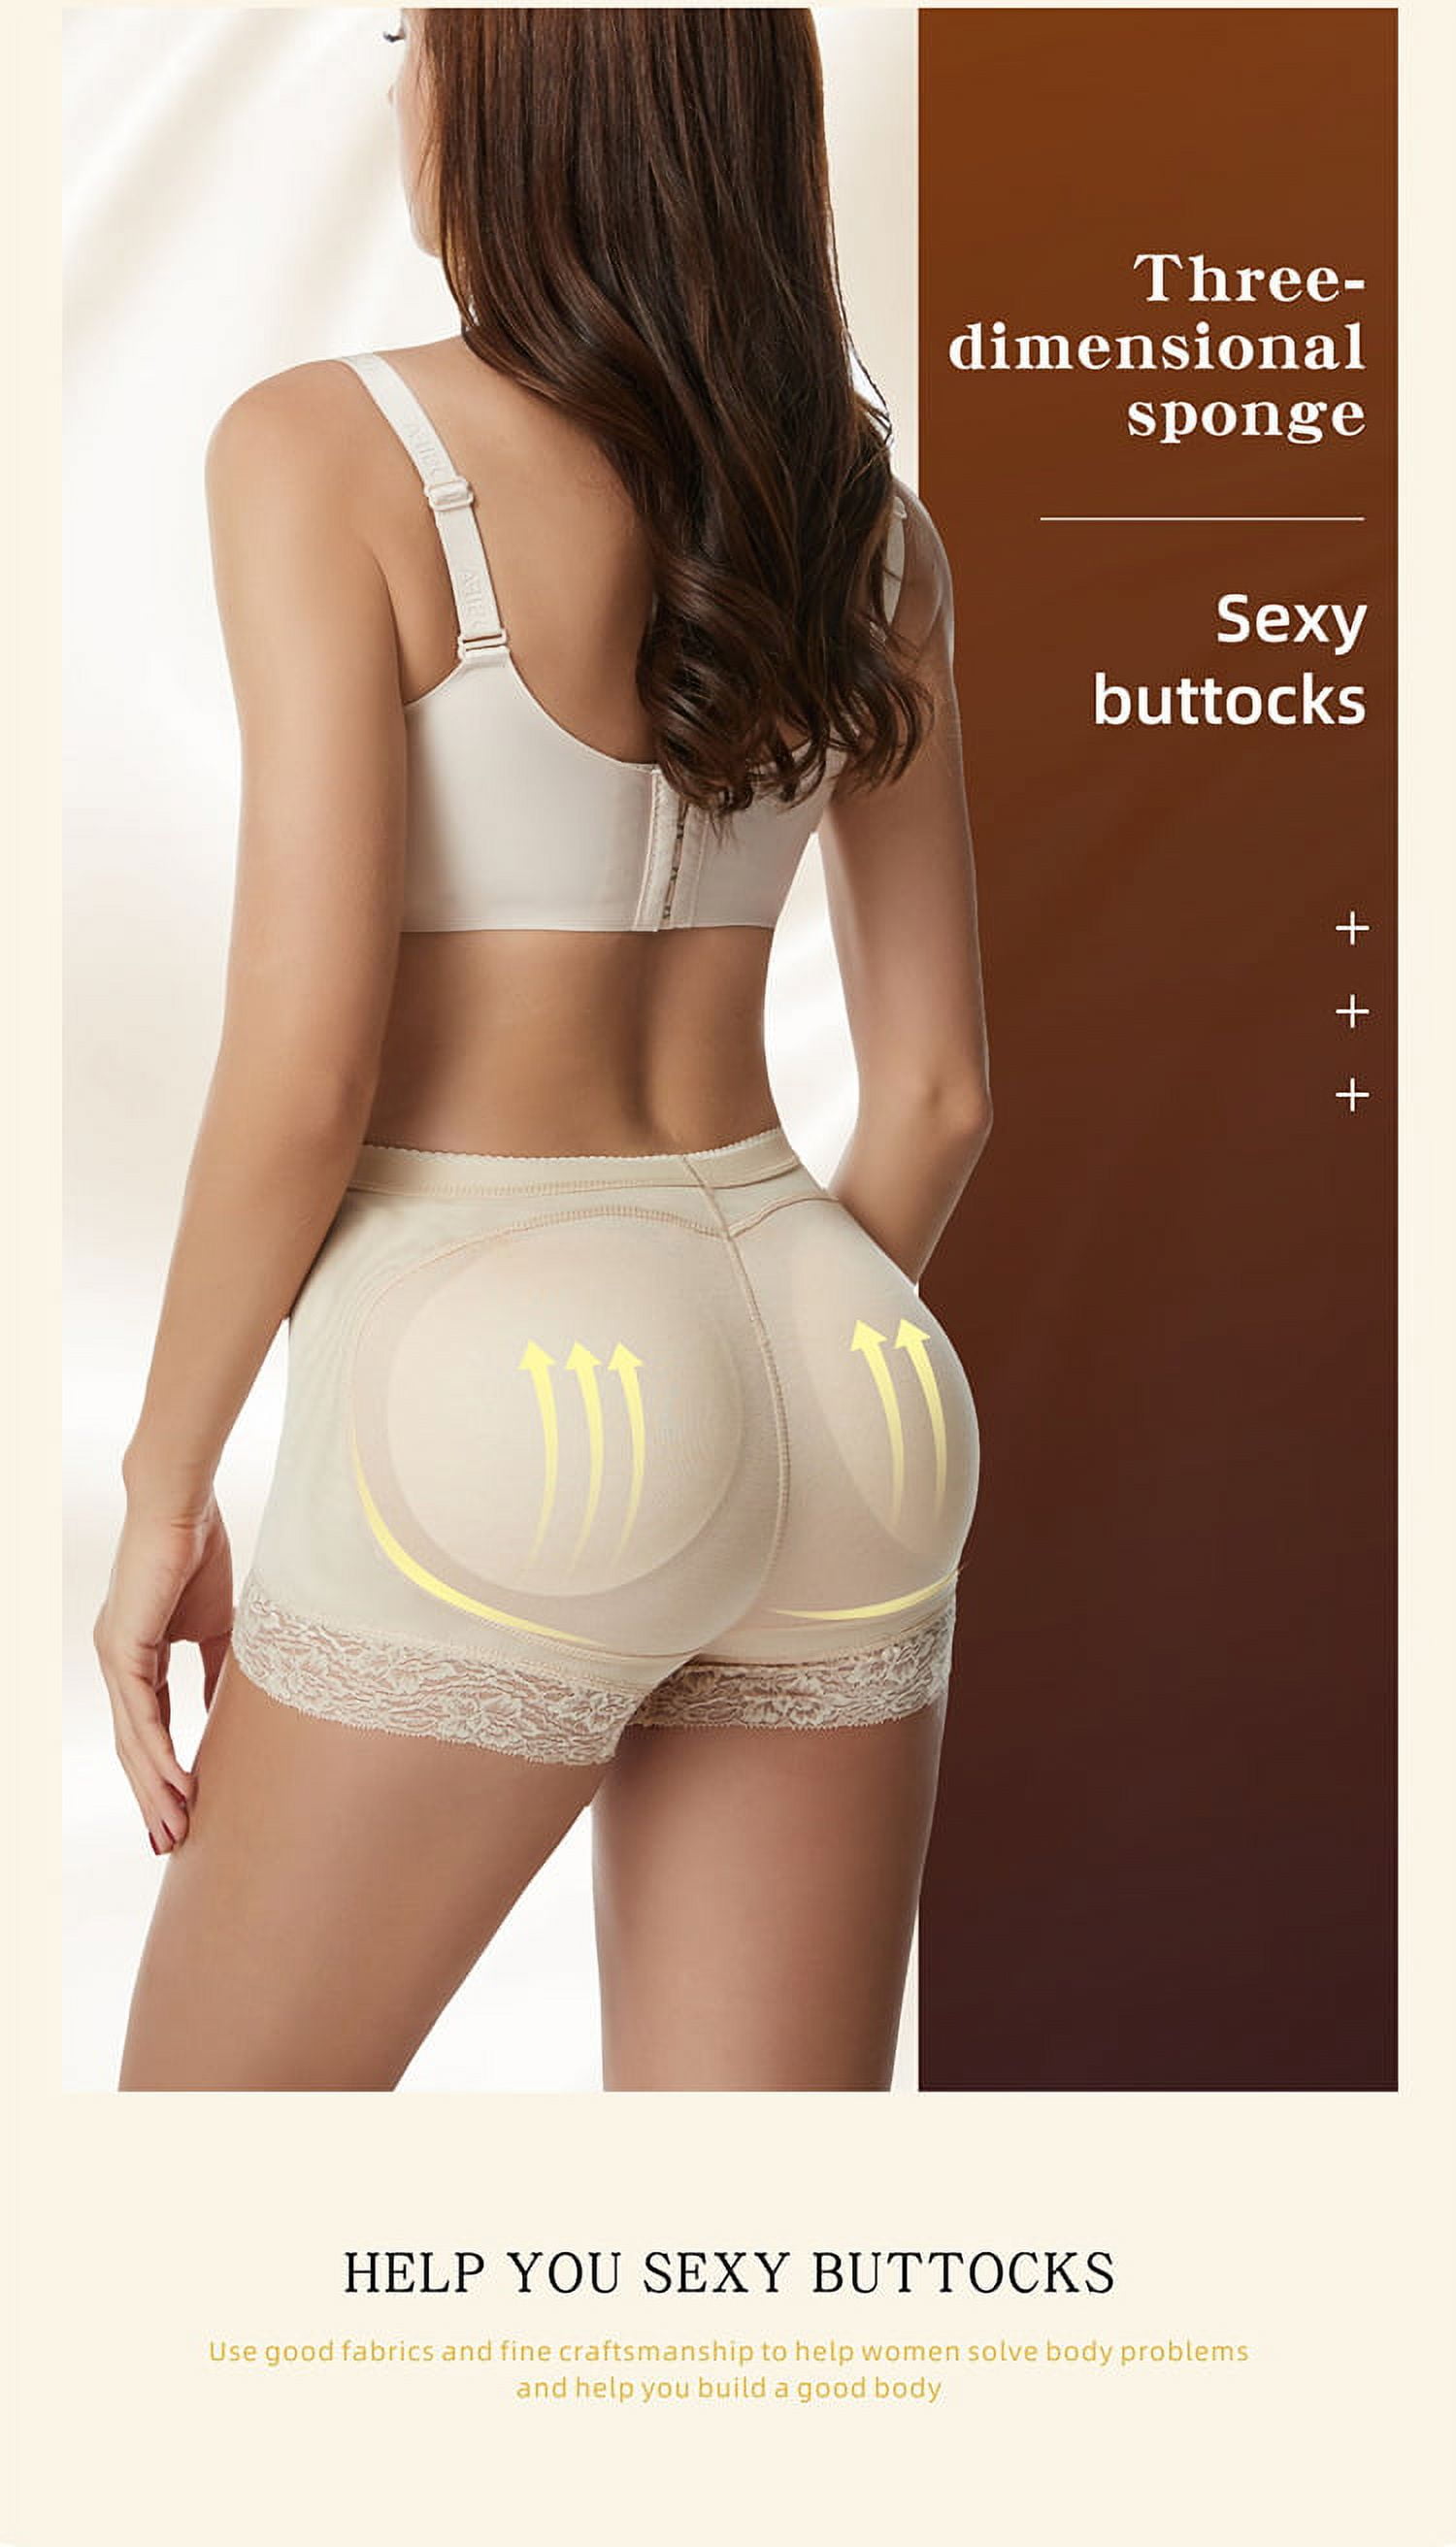 VENDAU Butt Pads for Bigger Butt Lifter Panties Butt and Hip Padded  Shapewear Big Butt Enhancer Padded Underwear Buttocks Pad : :  Clothing